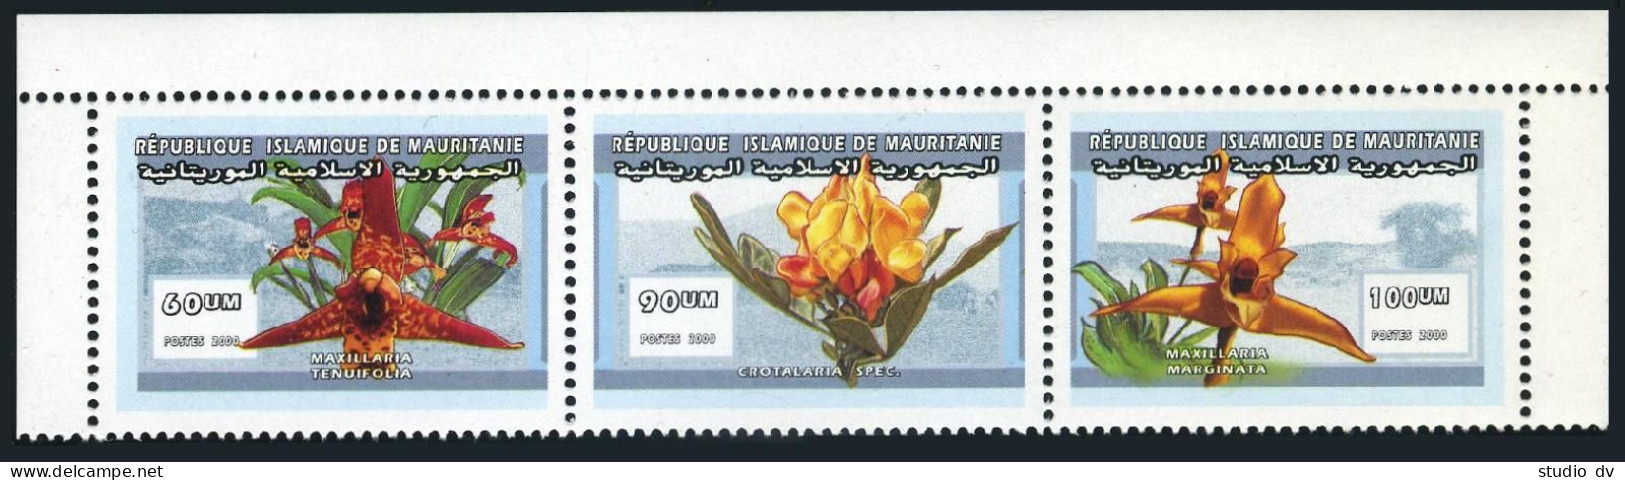 Mauritania 750 Ac Strip,MNH. Flowers 2000.Maxillaria,Crotalaria. - Mauritania (1960-...)